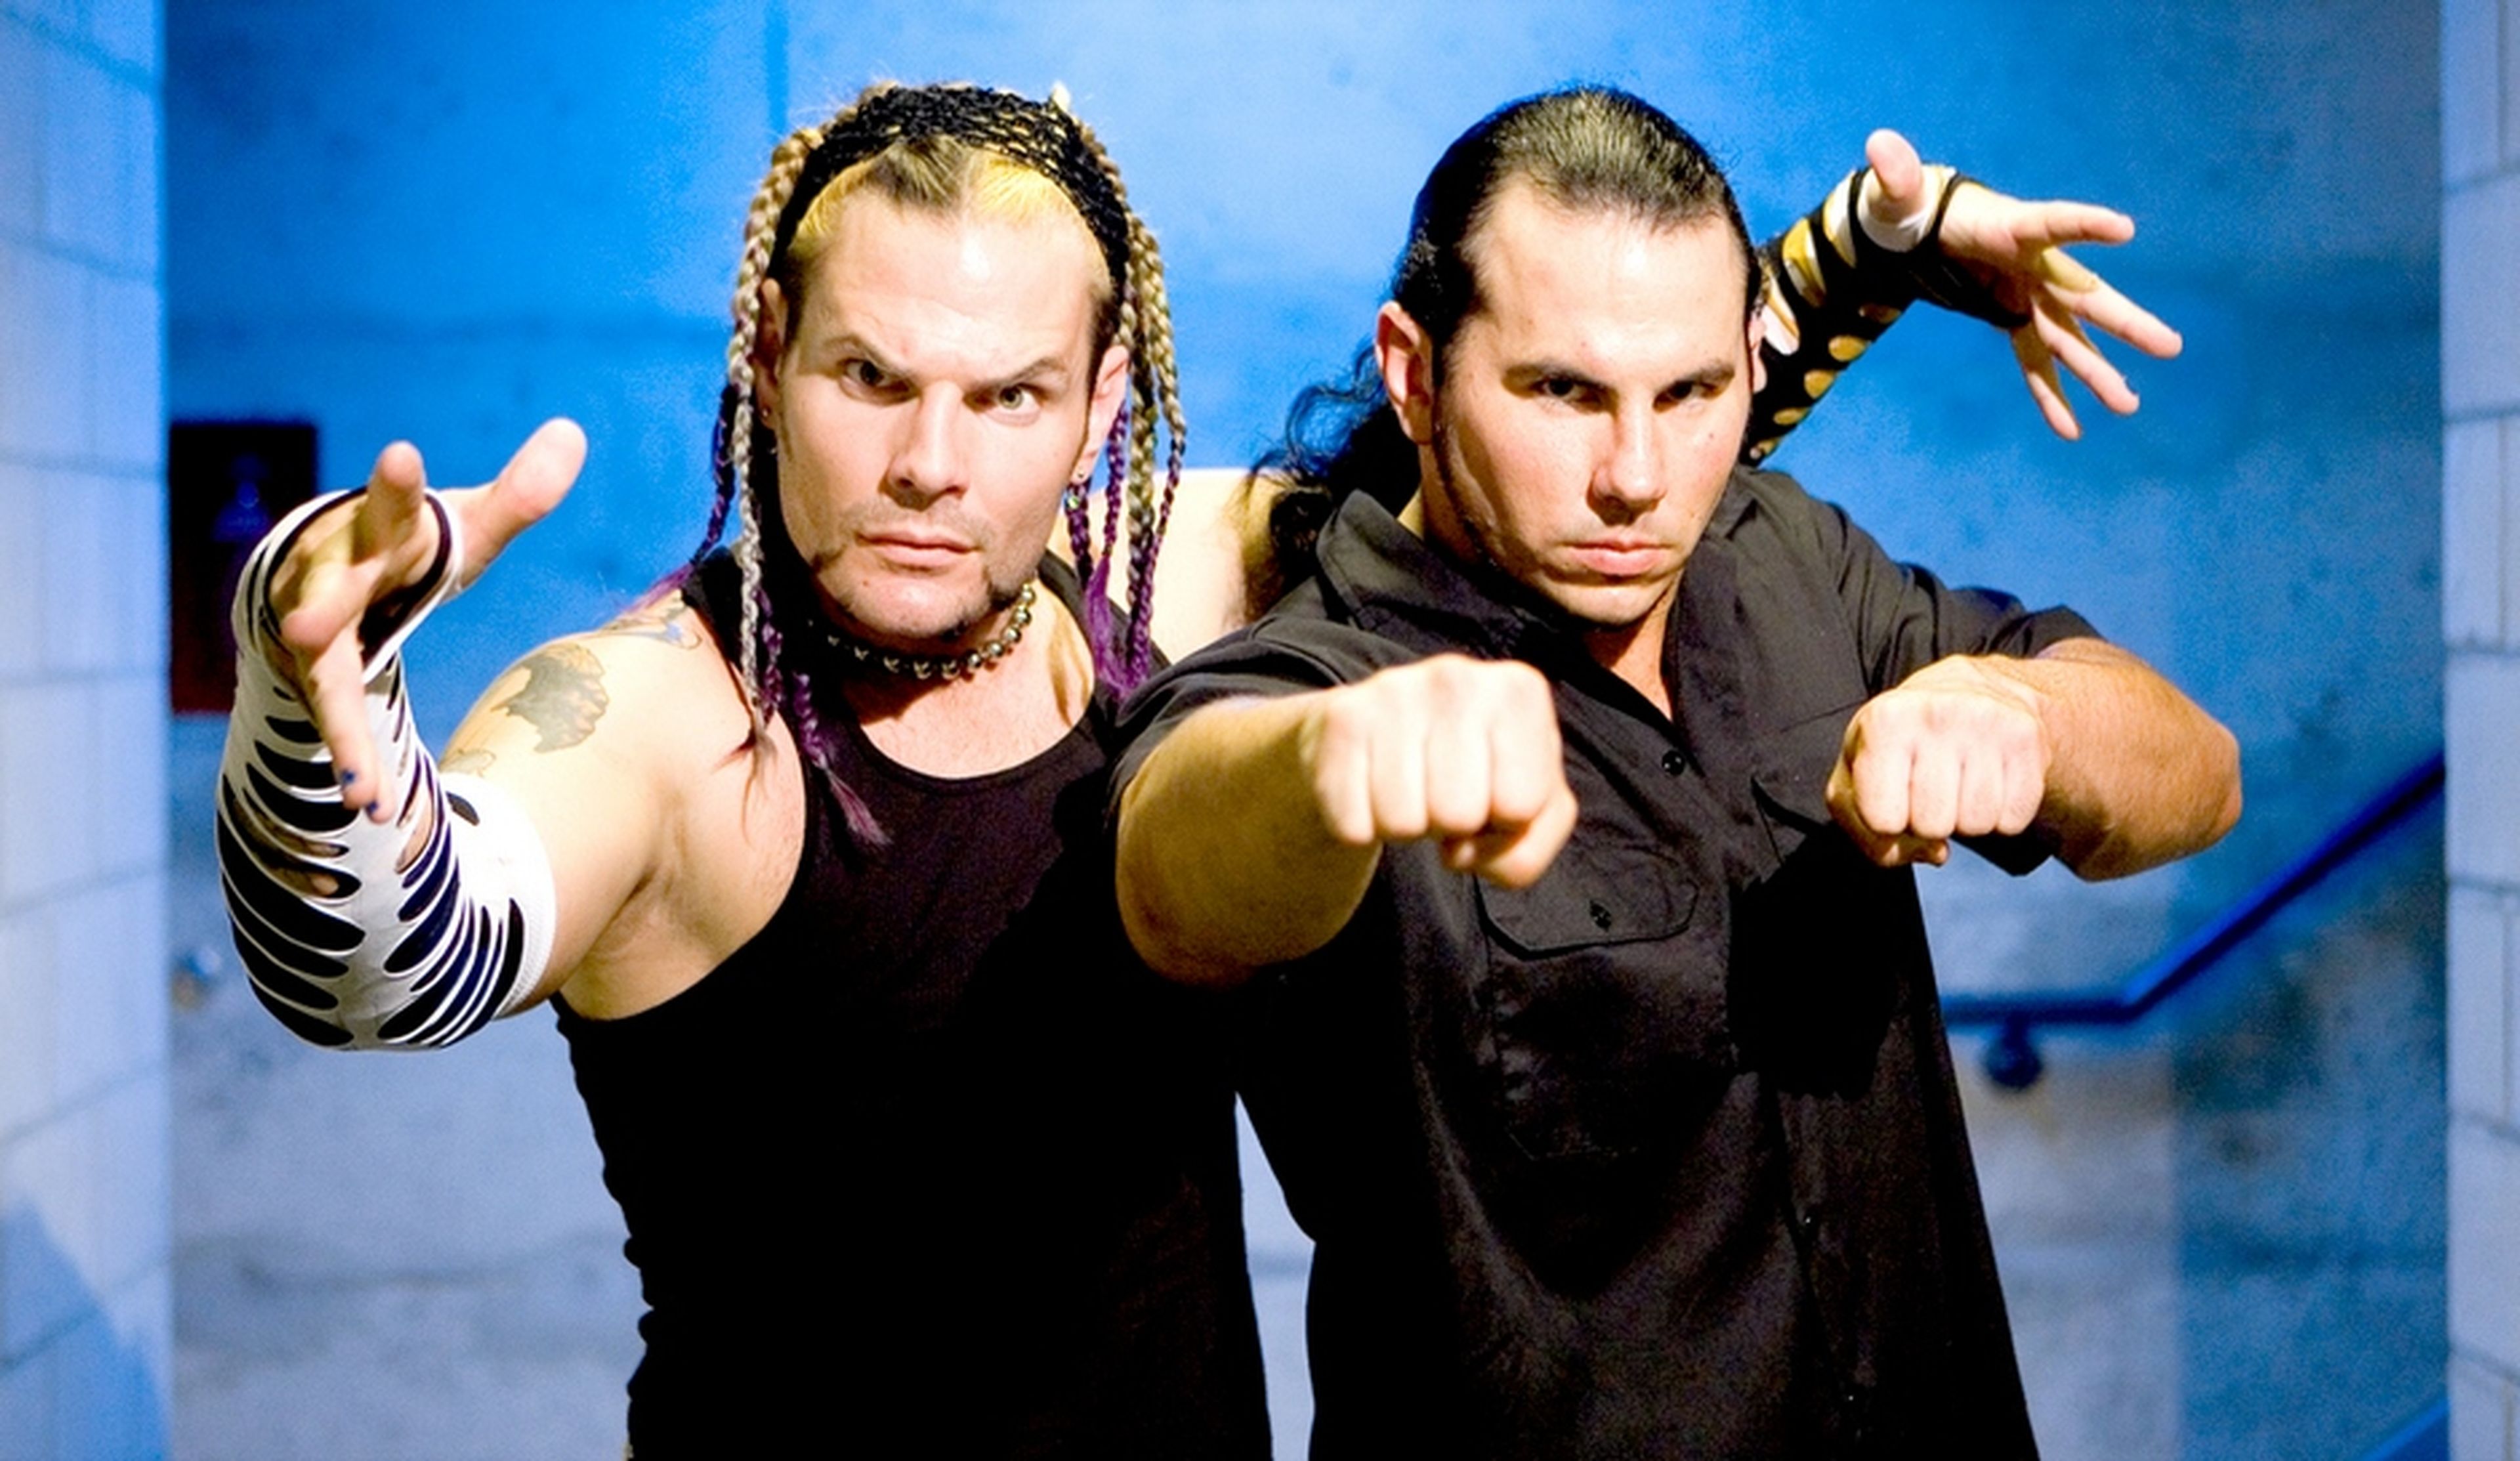 The Hardy Boyz